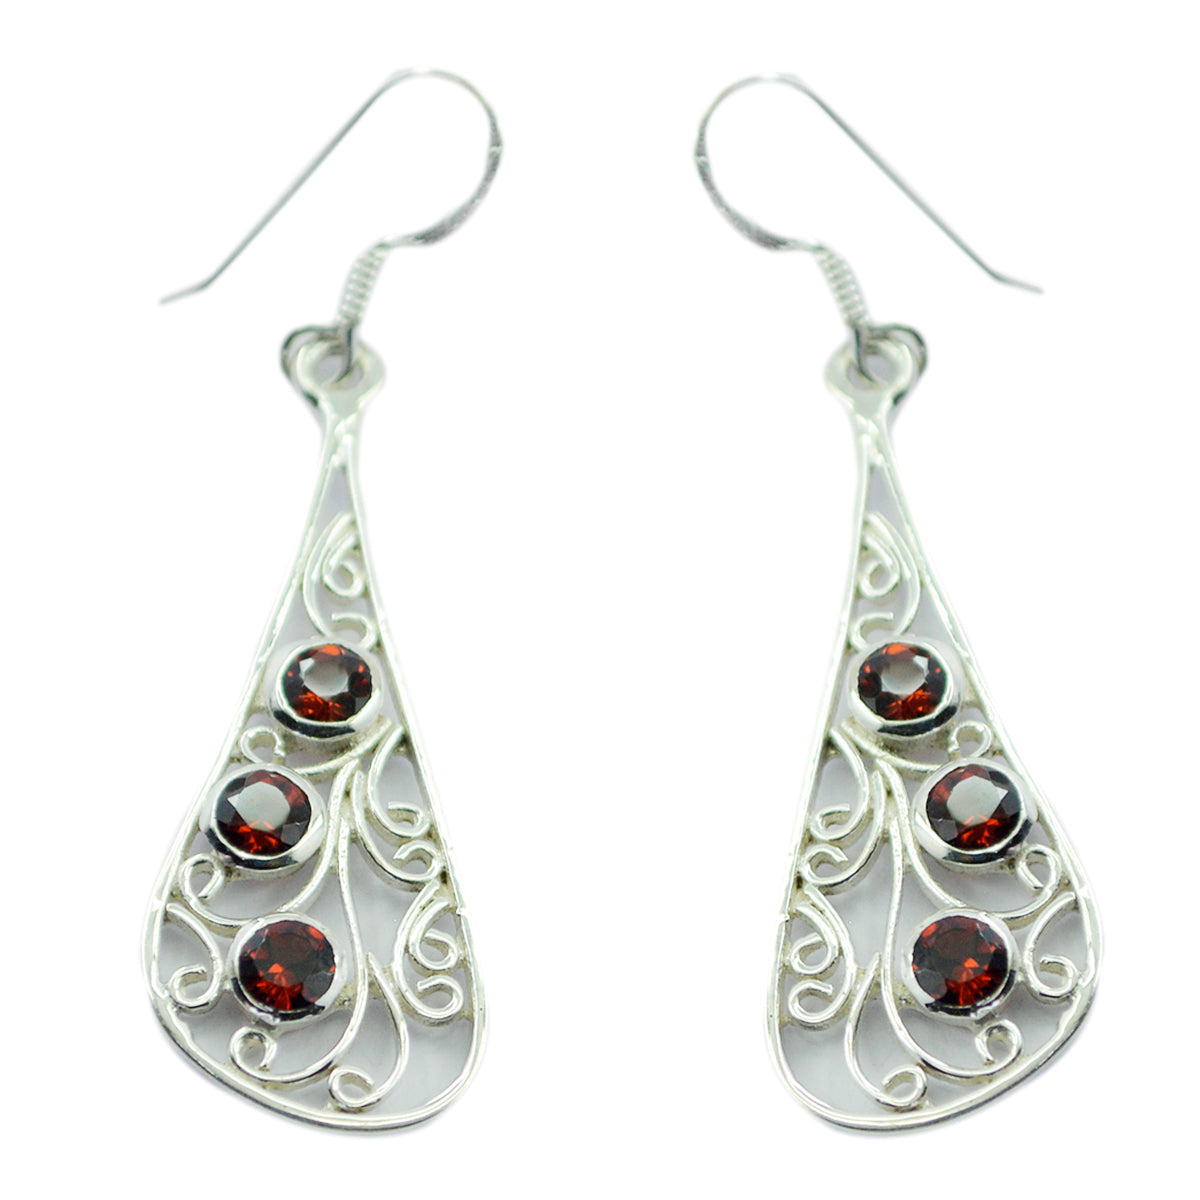 Riyo Good Gemstones round Faceted Red Garnet Silver Earring gift for good